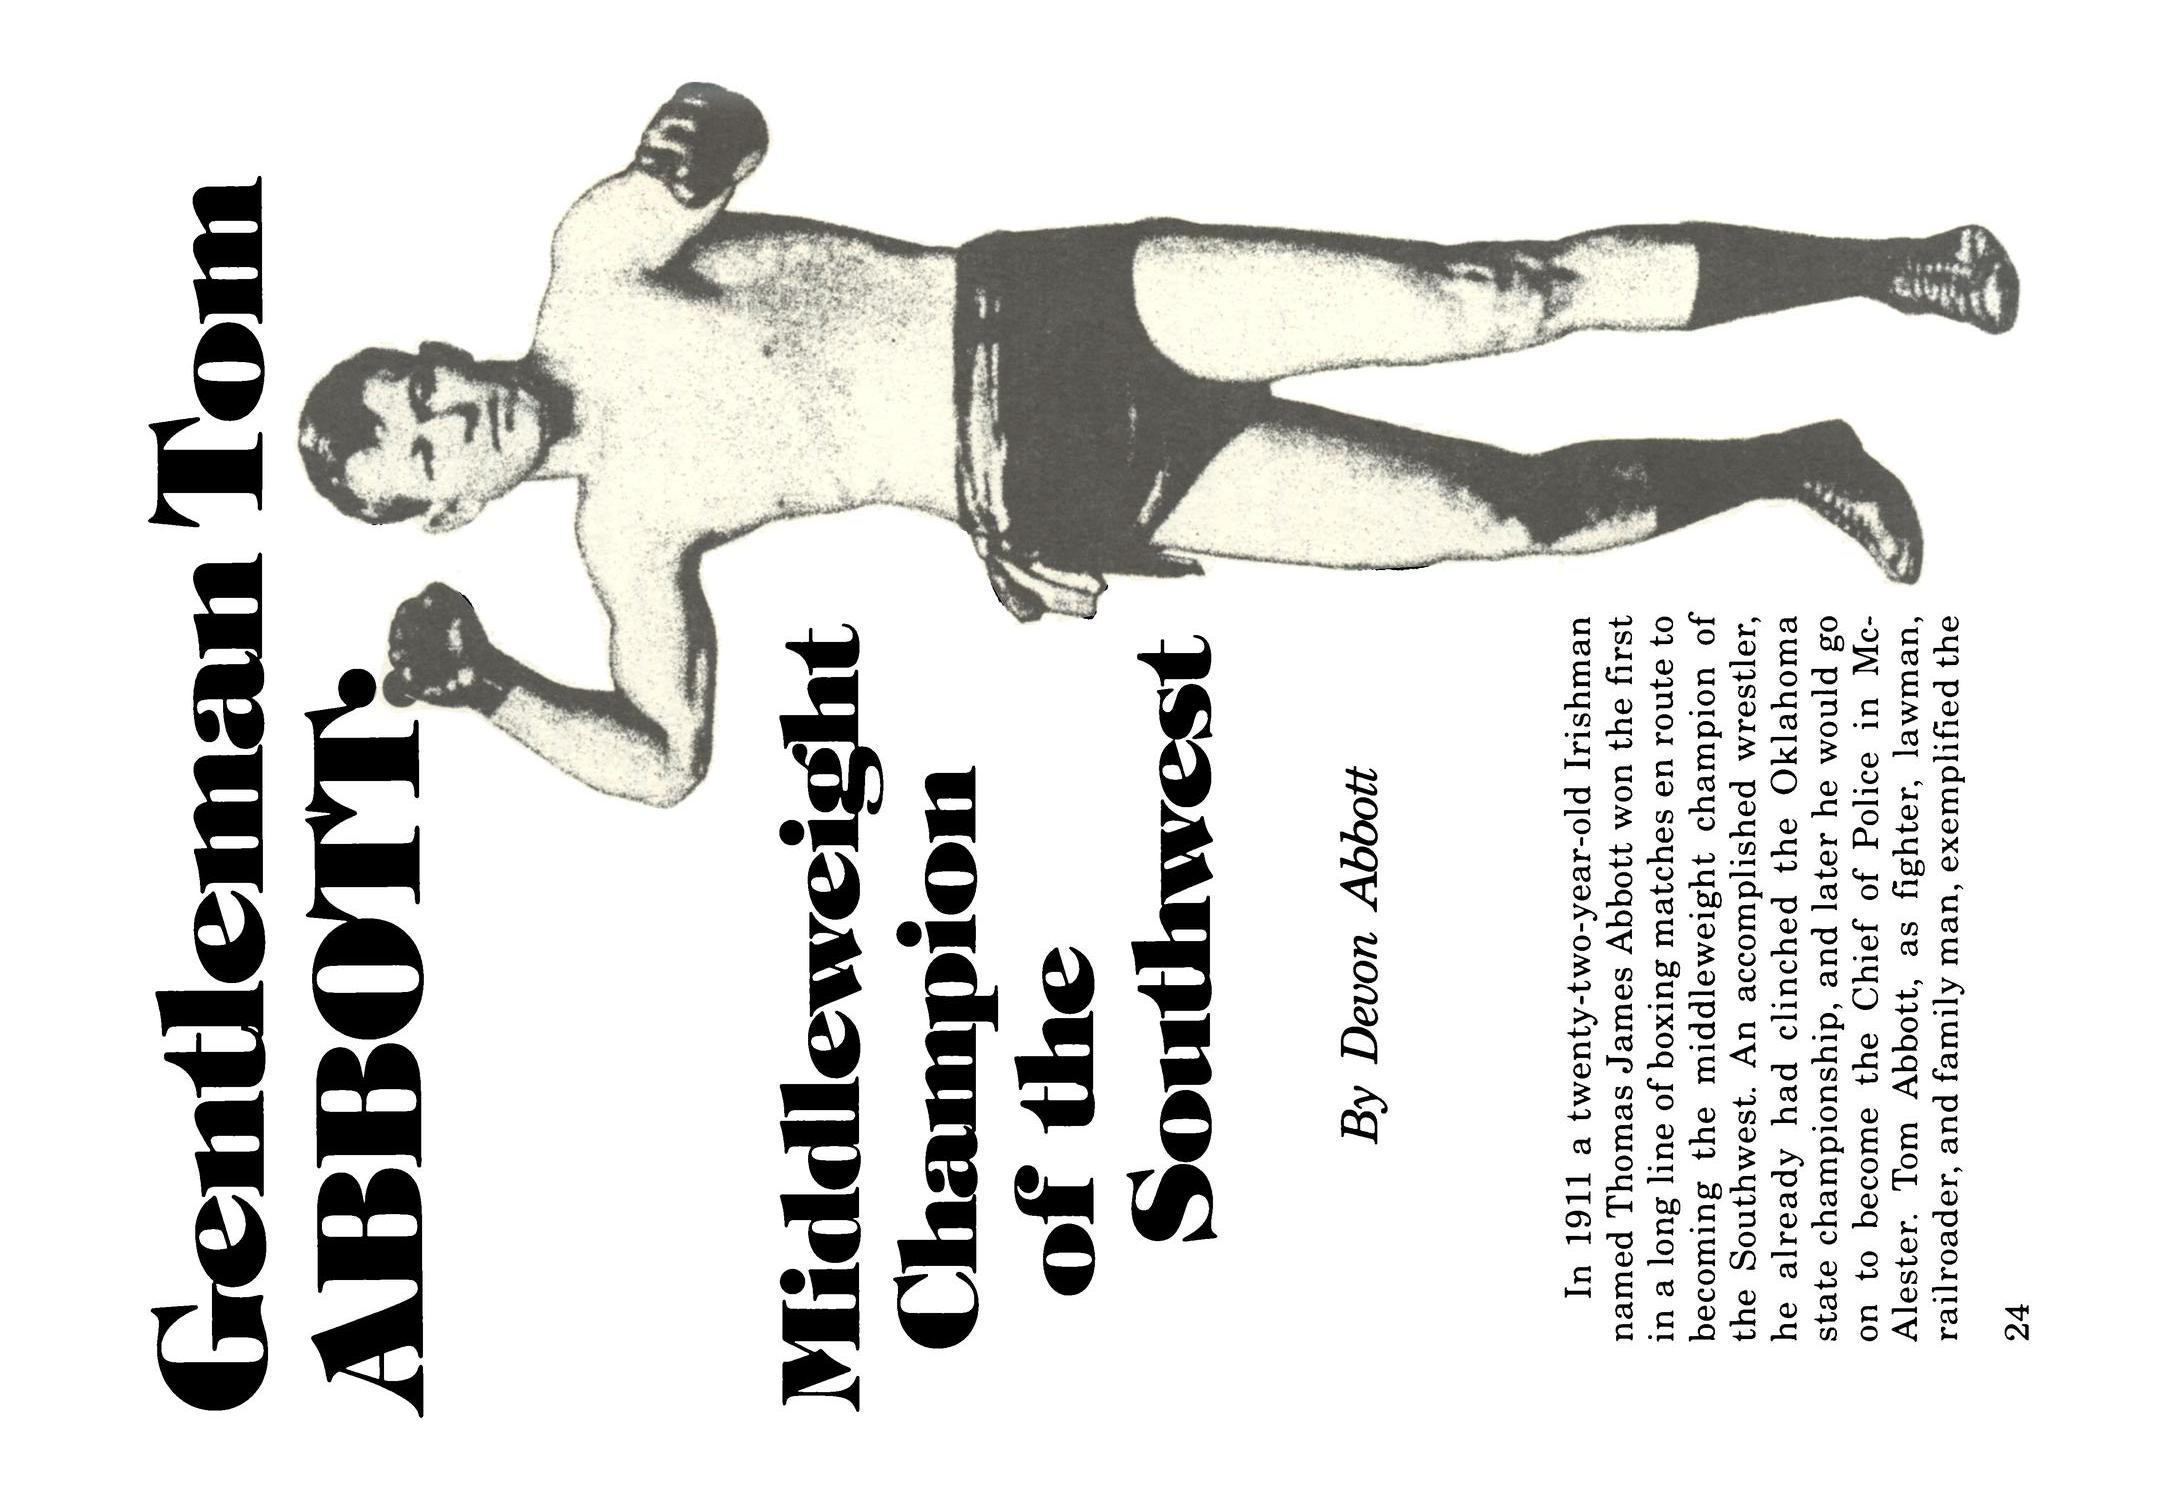 Gentleman Tom Abbott: Middleweight Champion of the Southwest
                                                
                                                    24
                                                